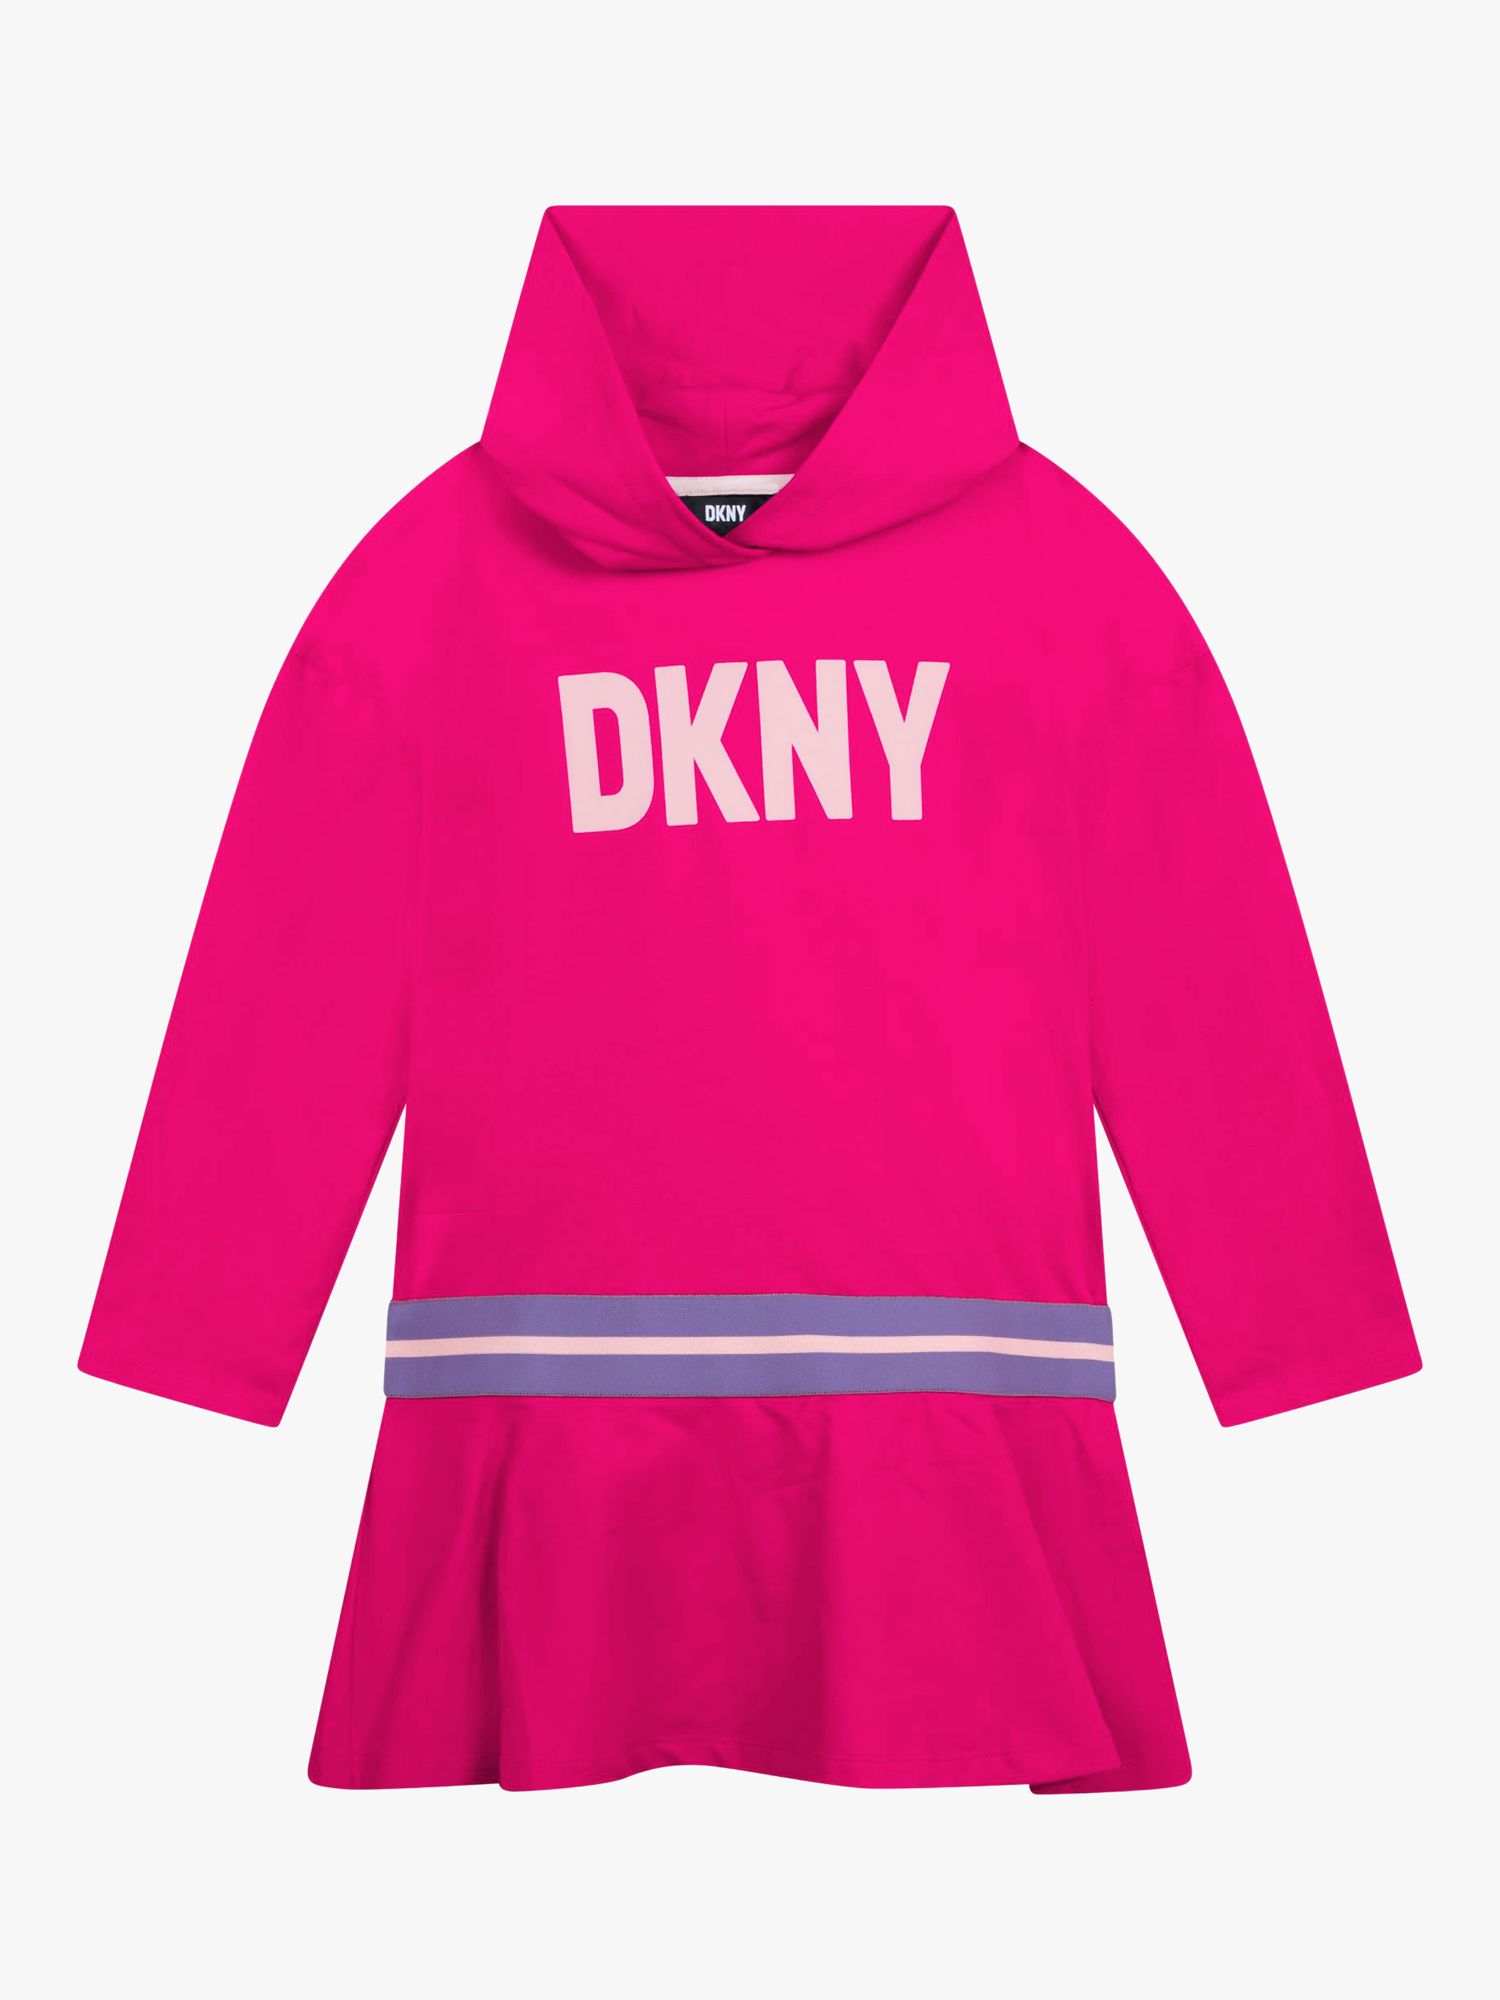 DKNY Kids' Logo Hooded Dress, Bright Pink, 14 years